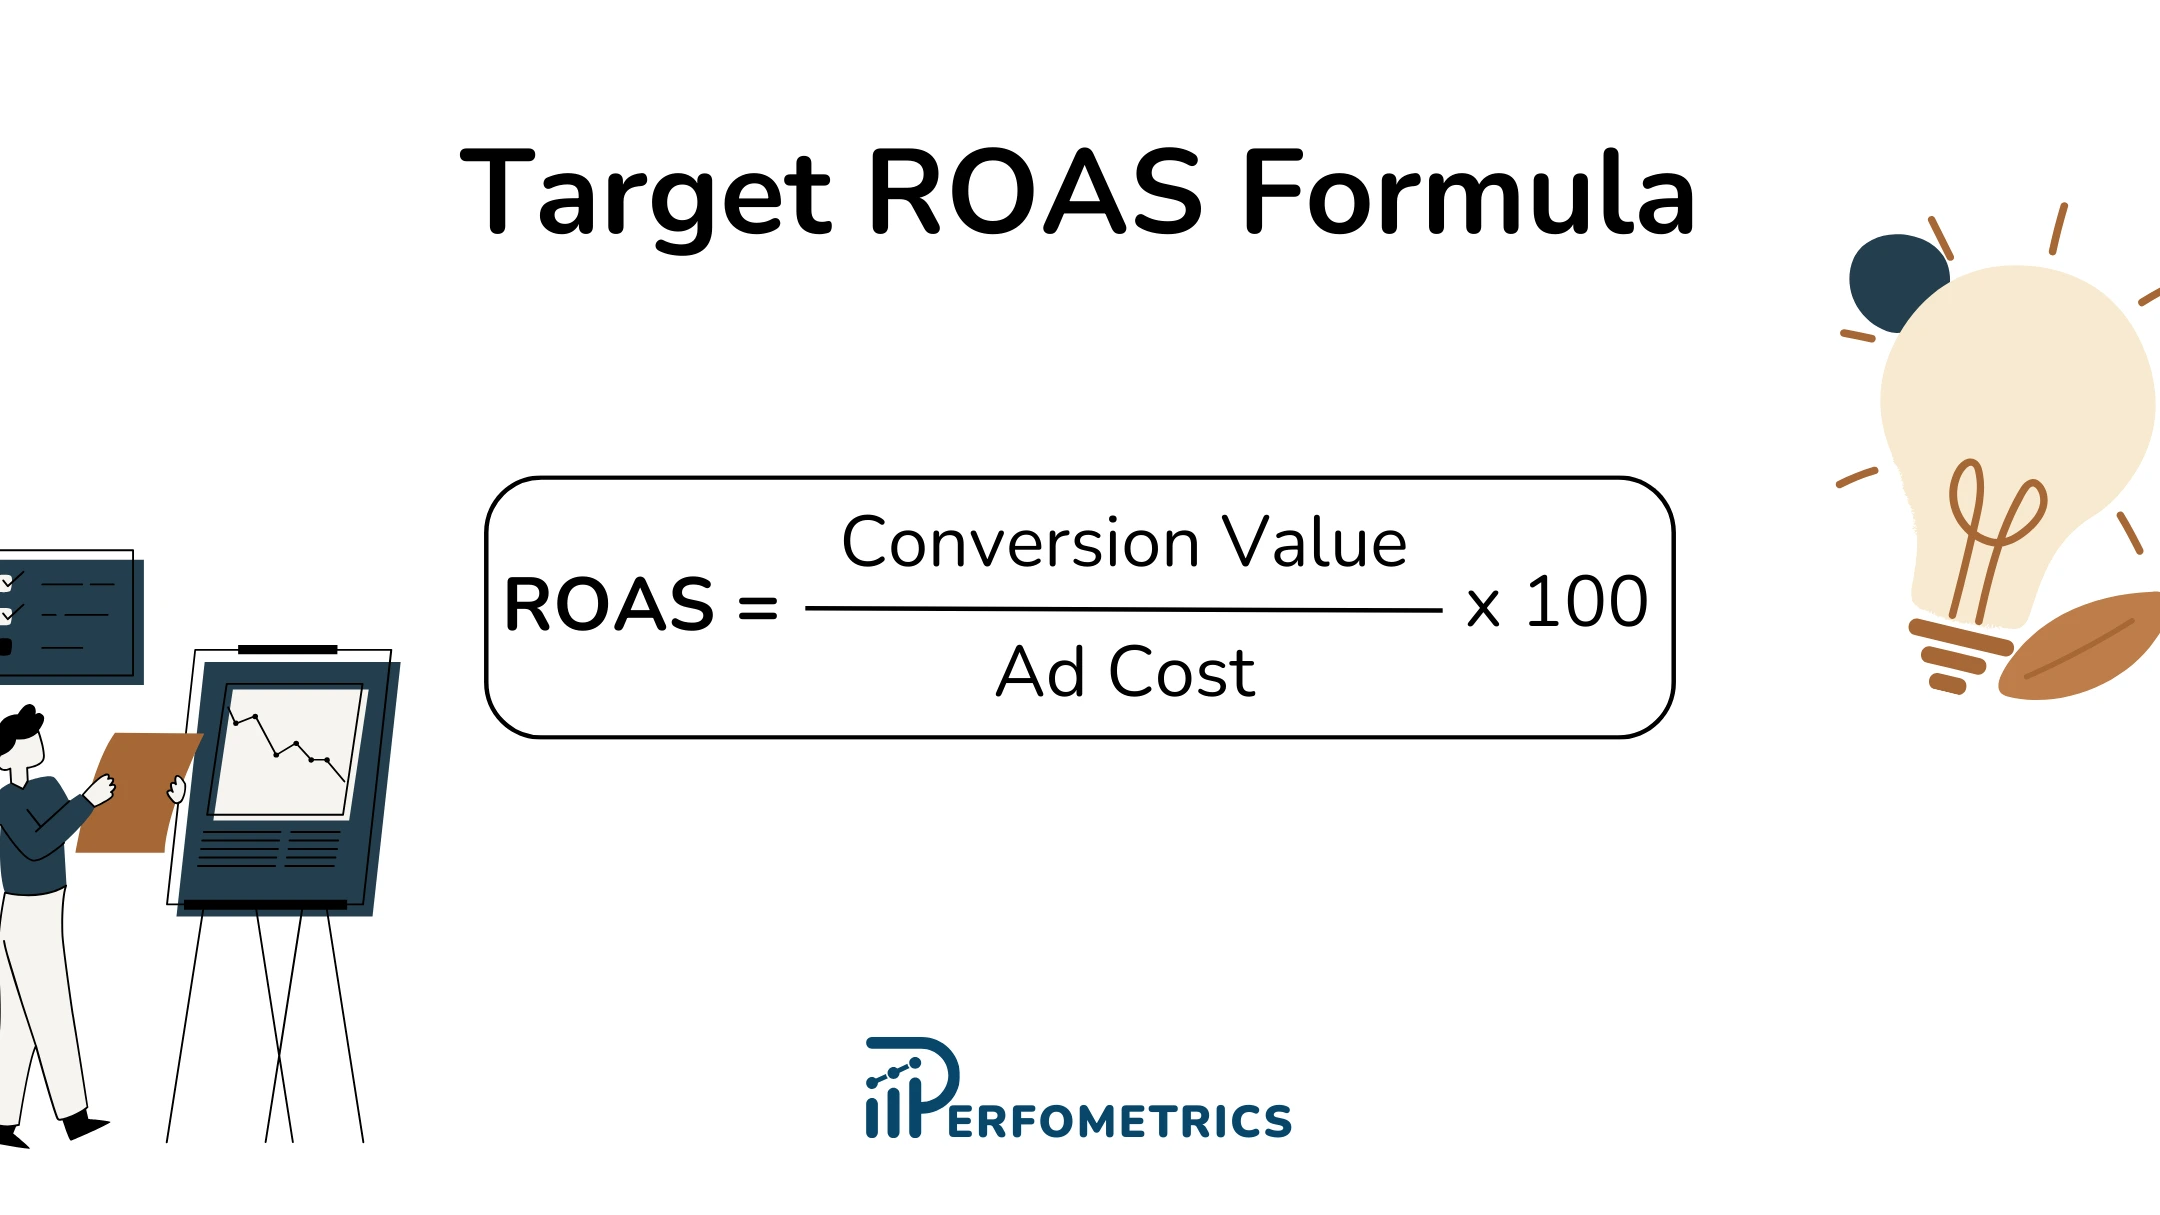 Target ROAS Formula